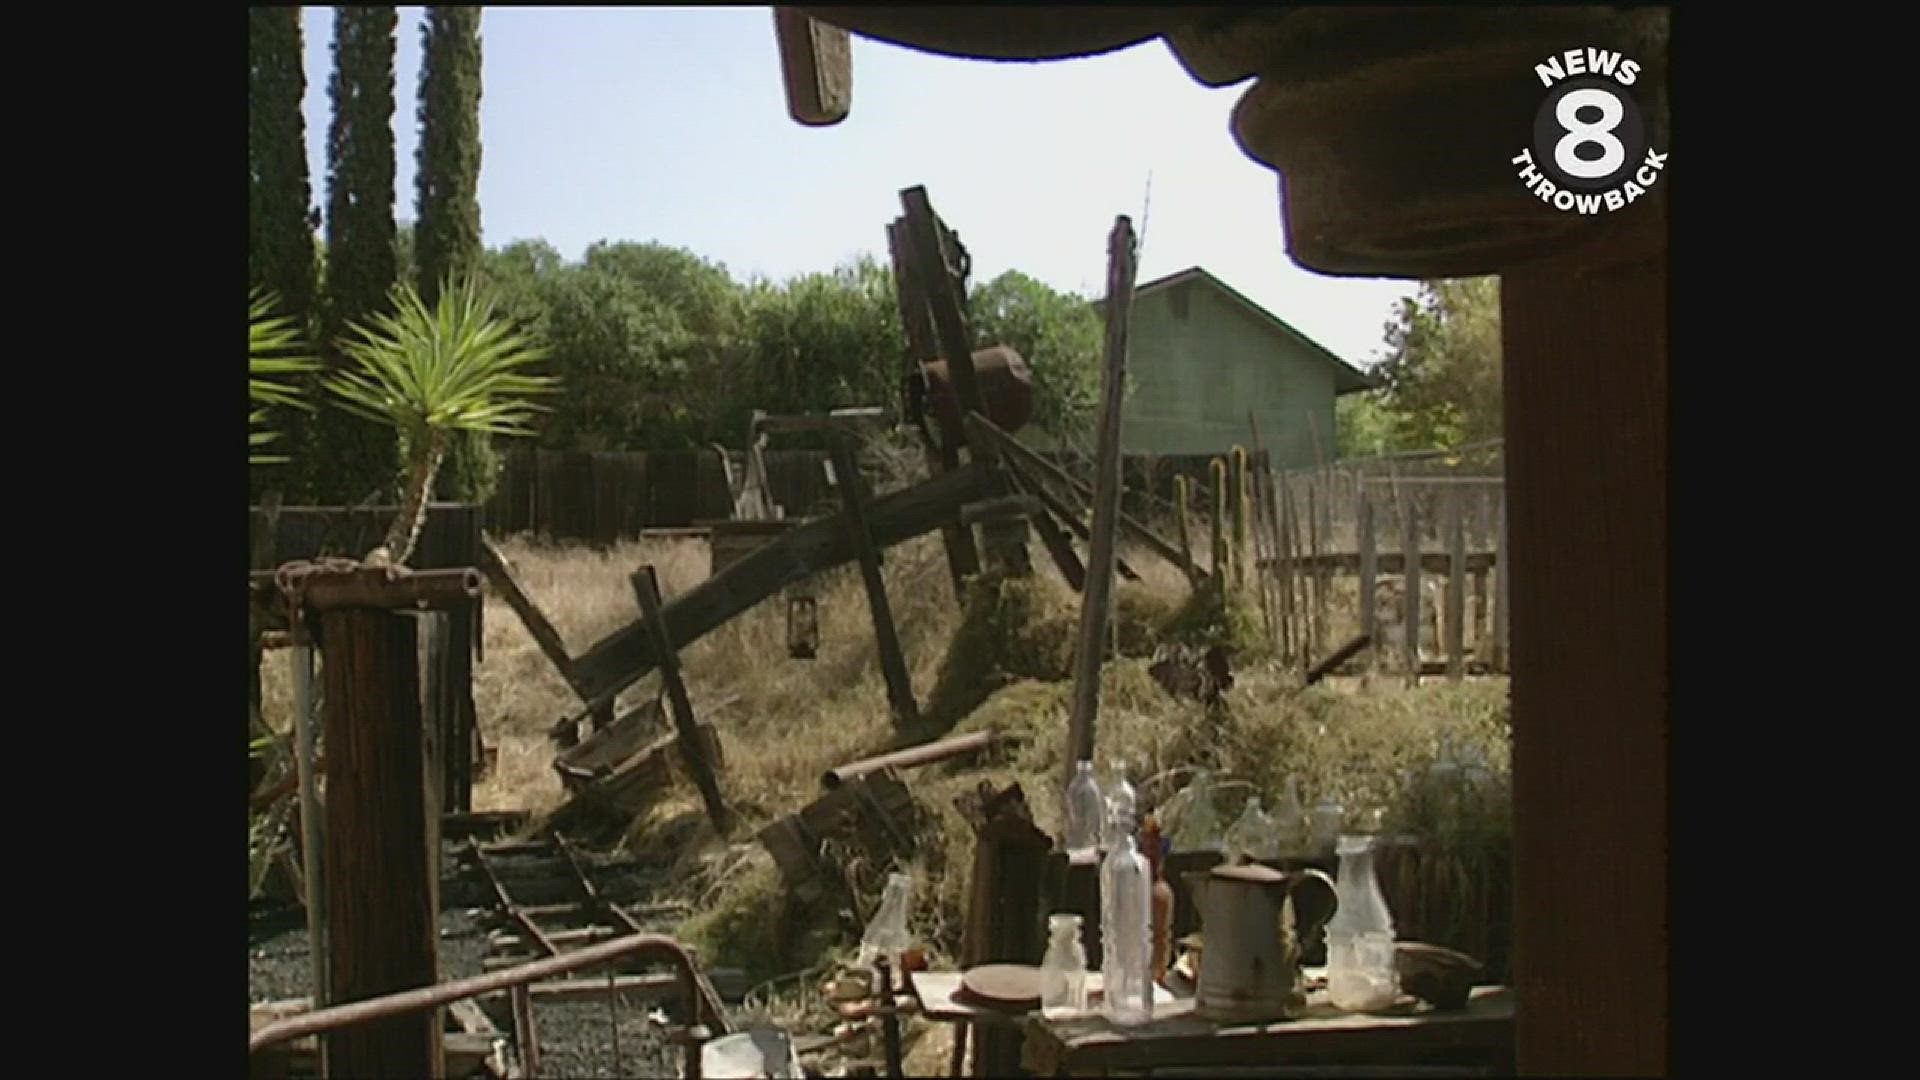 News 8's Larry Himmel - Backyard Series 1993: 'Ghost Town Mining Camp'